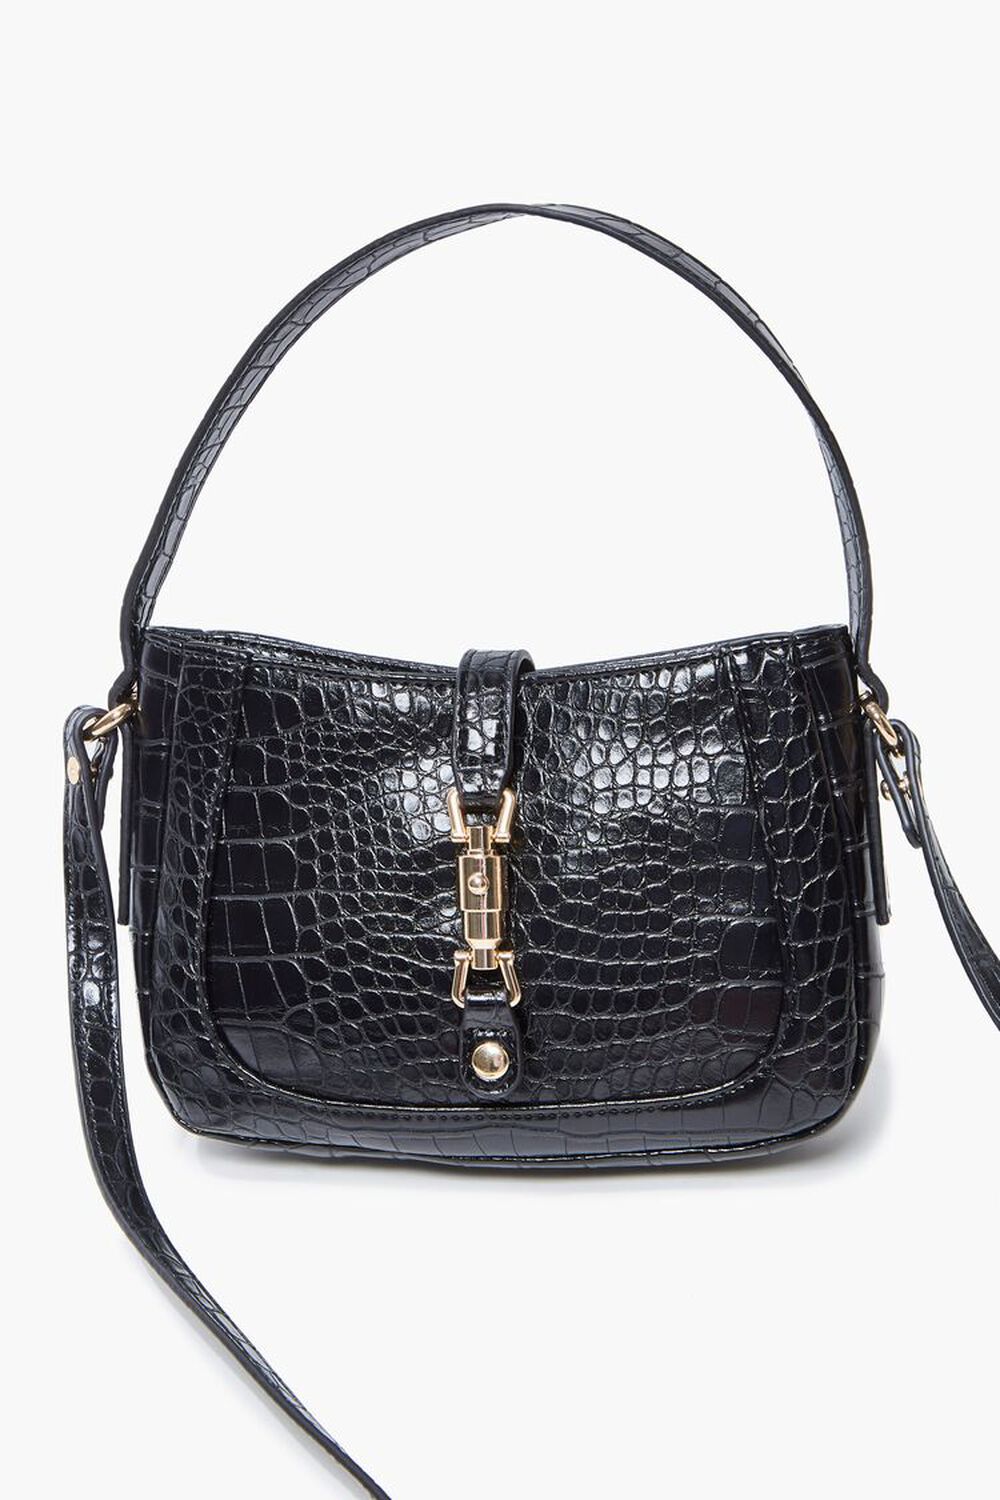 BLACK Faux Croc Leather Crossbody Bag, image 1